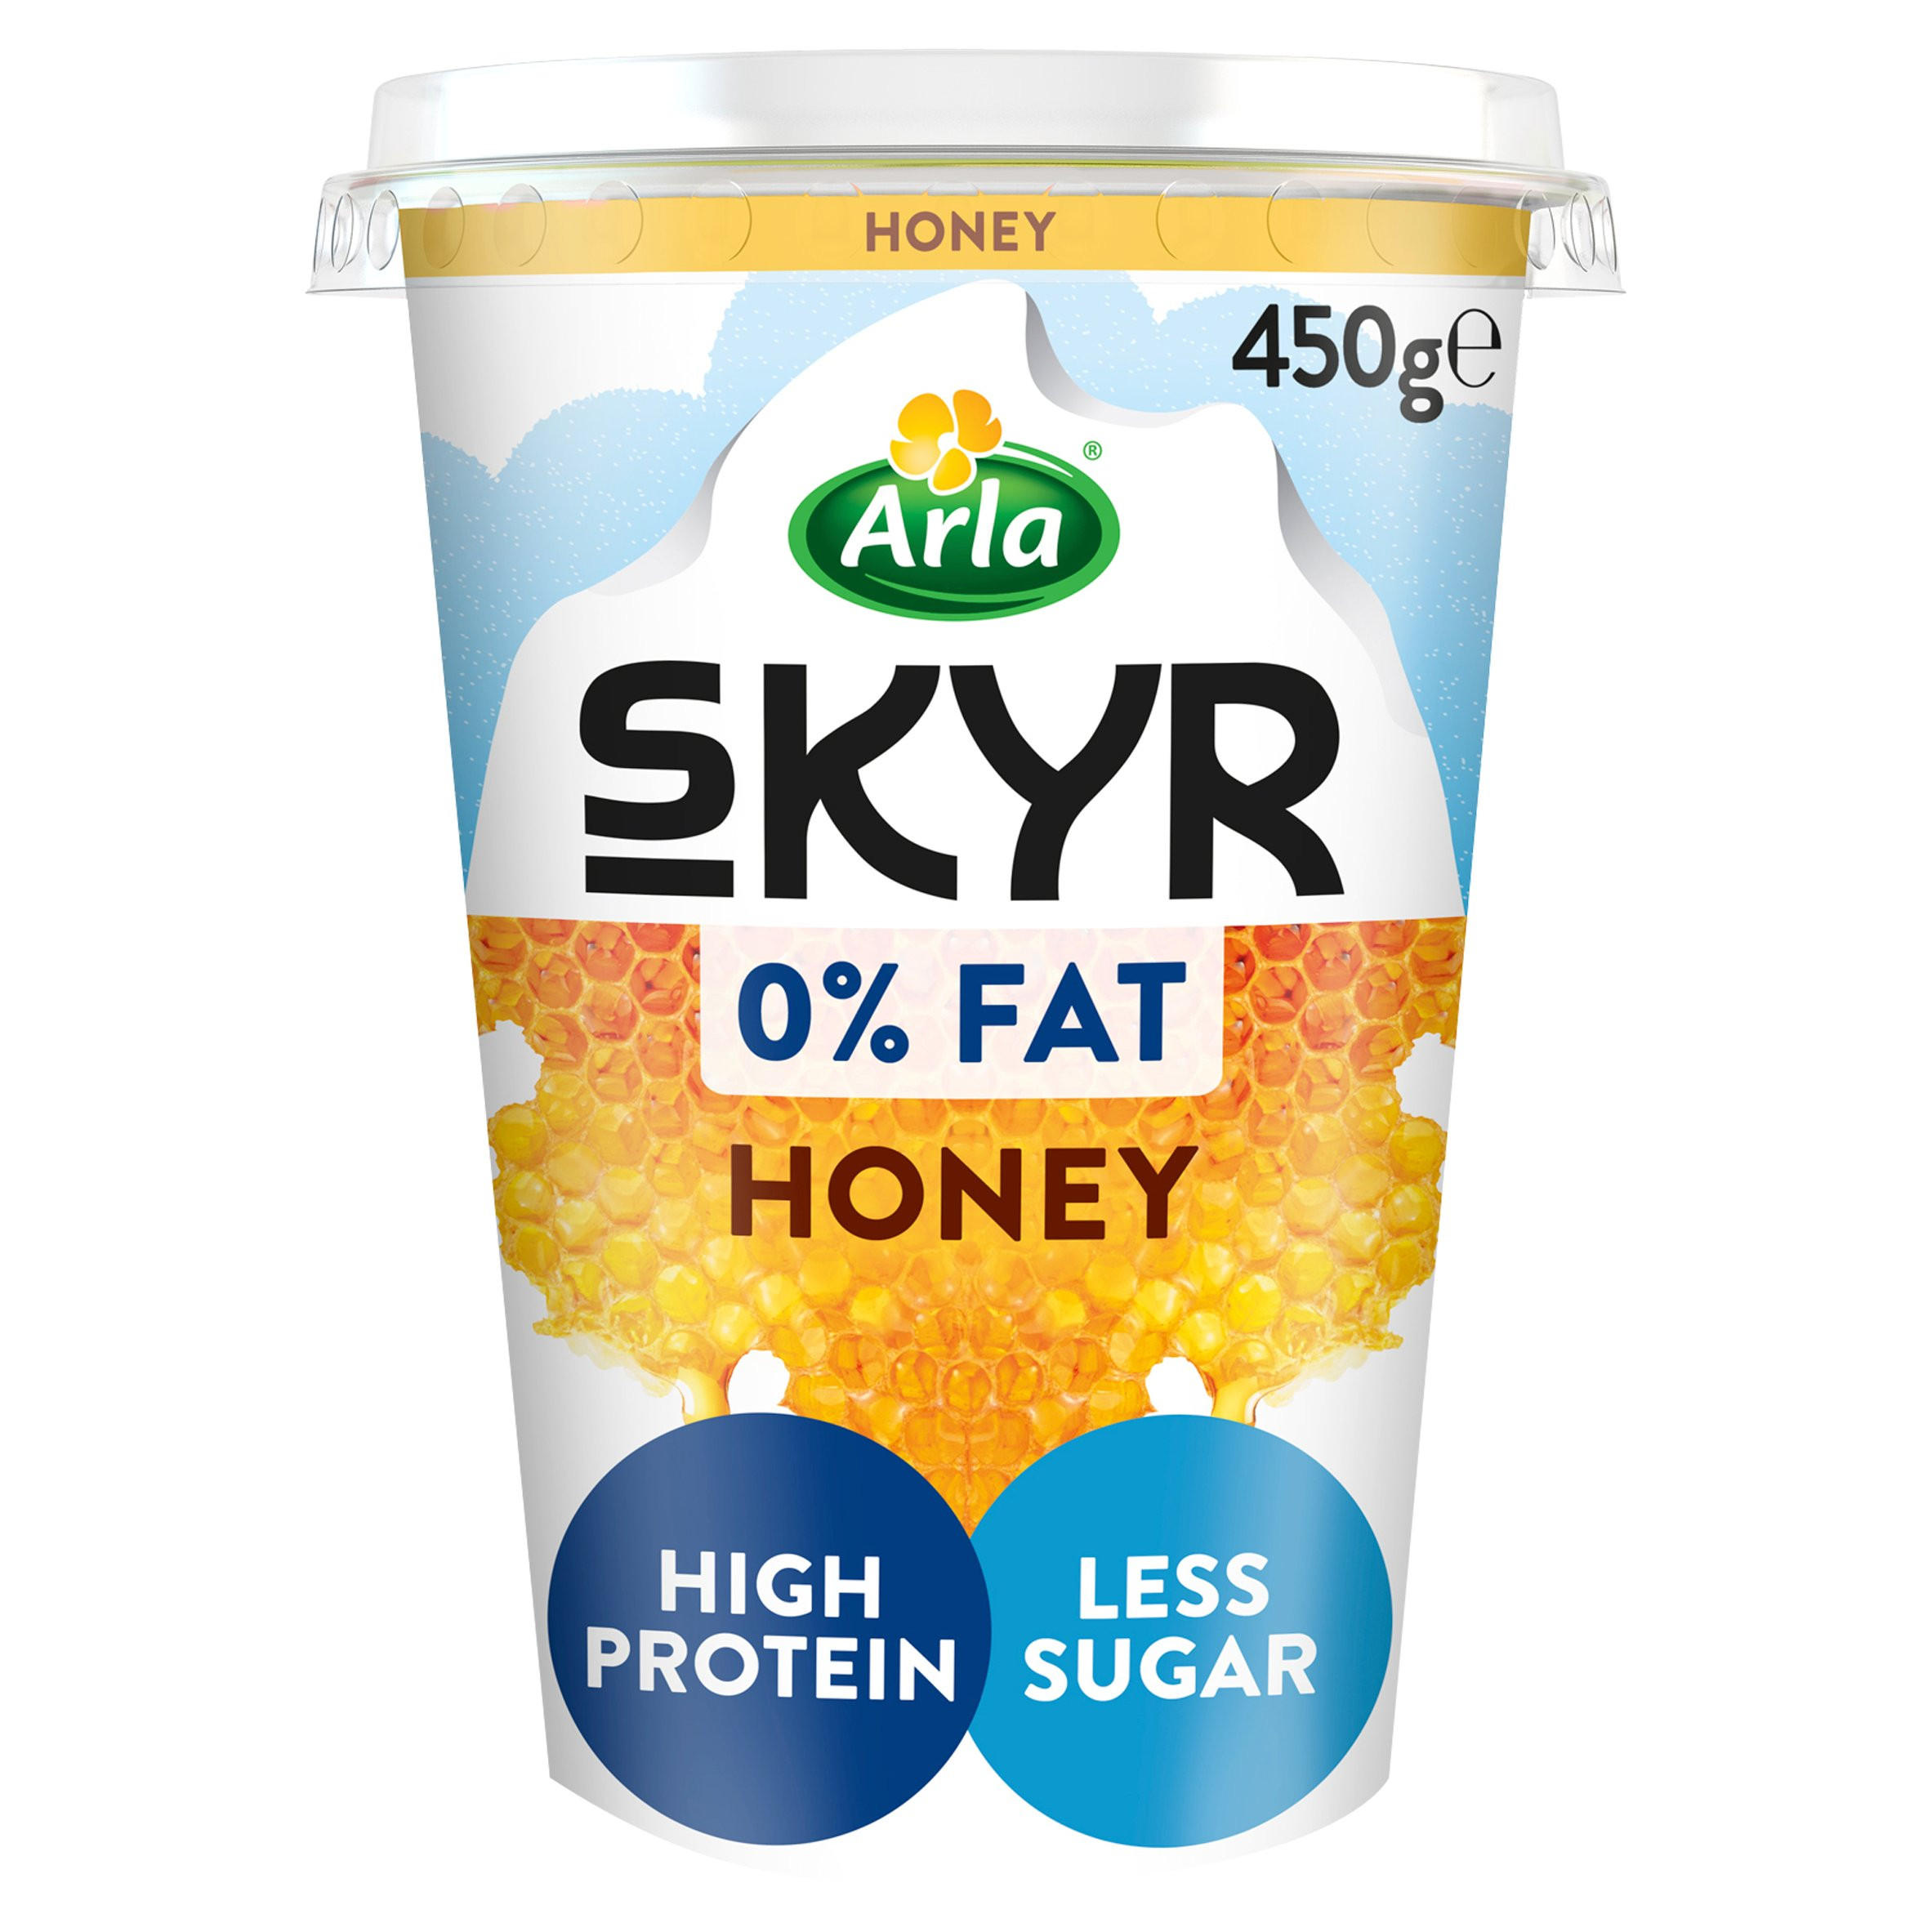 Arla Skyr Honey Icelandic Style Yogurt 450g | Low Fat & Fat Free Yogurt |  Iceland Foods